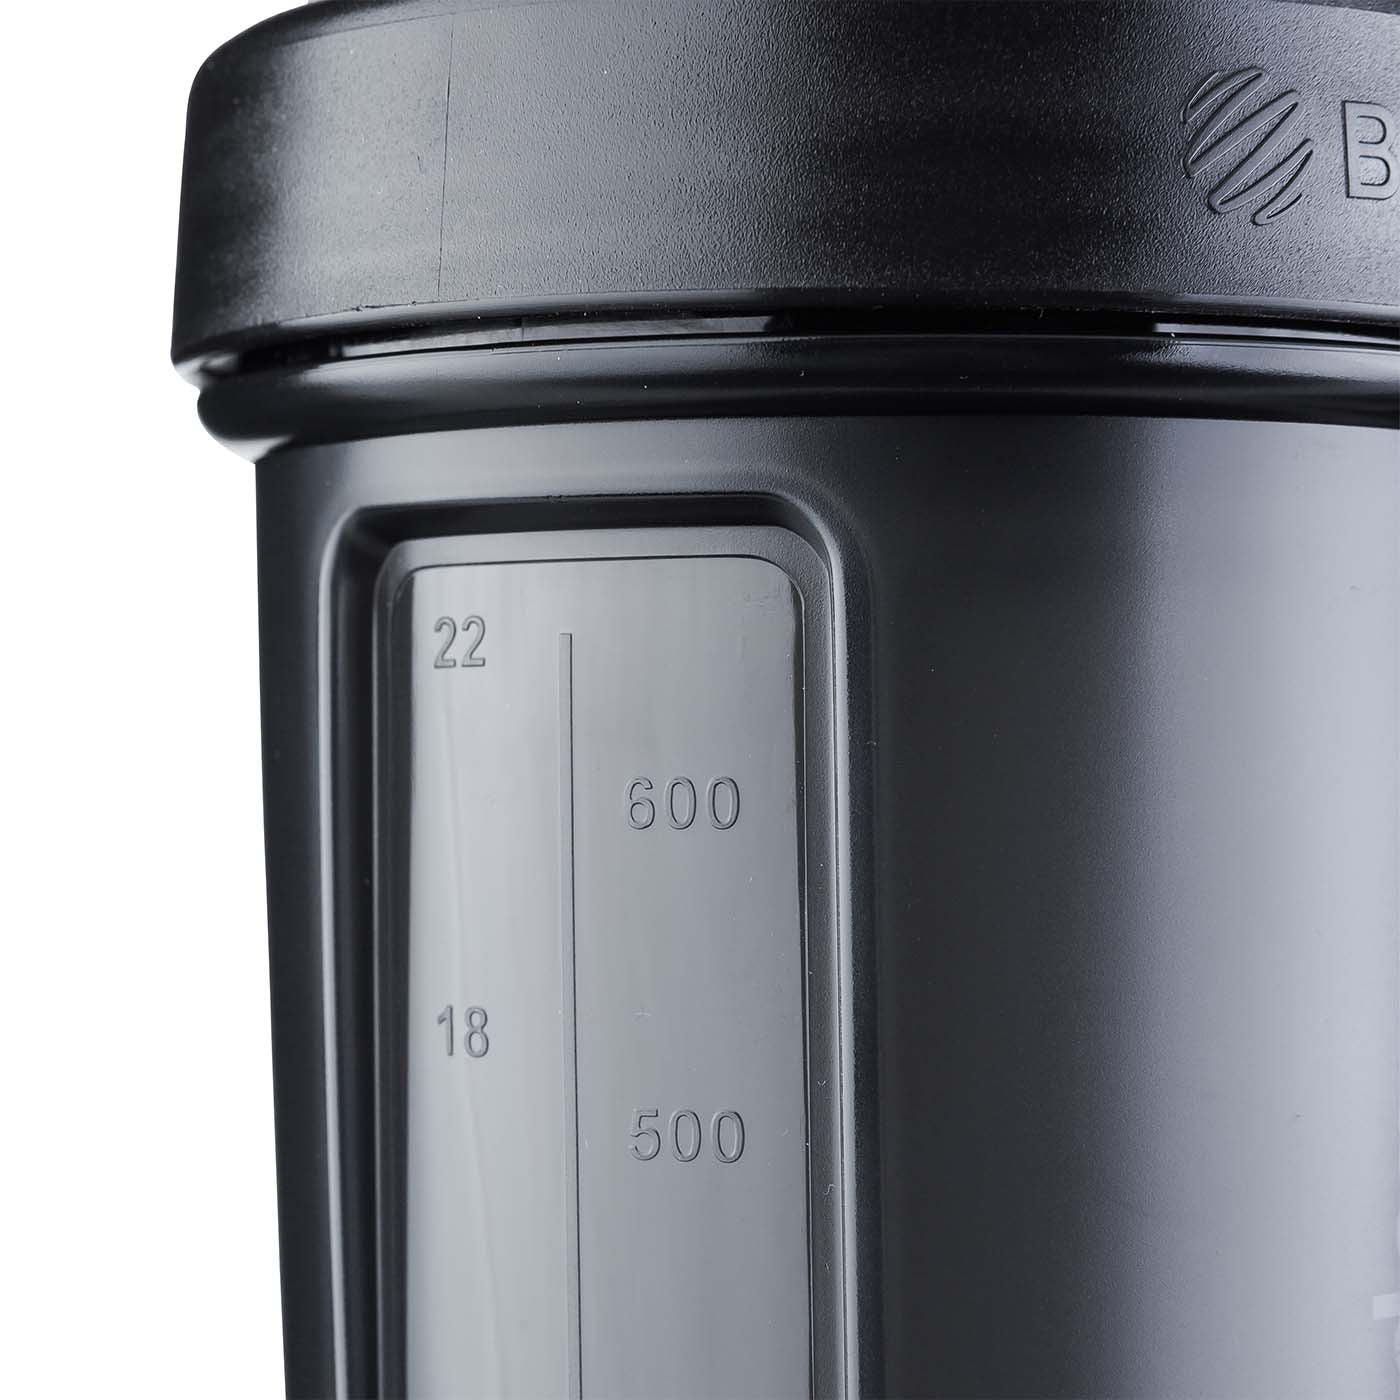 Close-up photo of BlenderBottle shaker's ml/oz measurement markings. Black plastic design for accurate measurement. Functional & convenient.